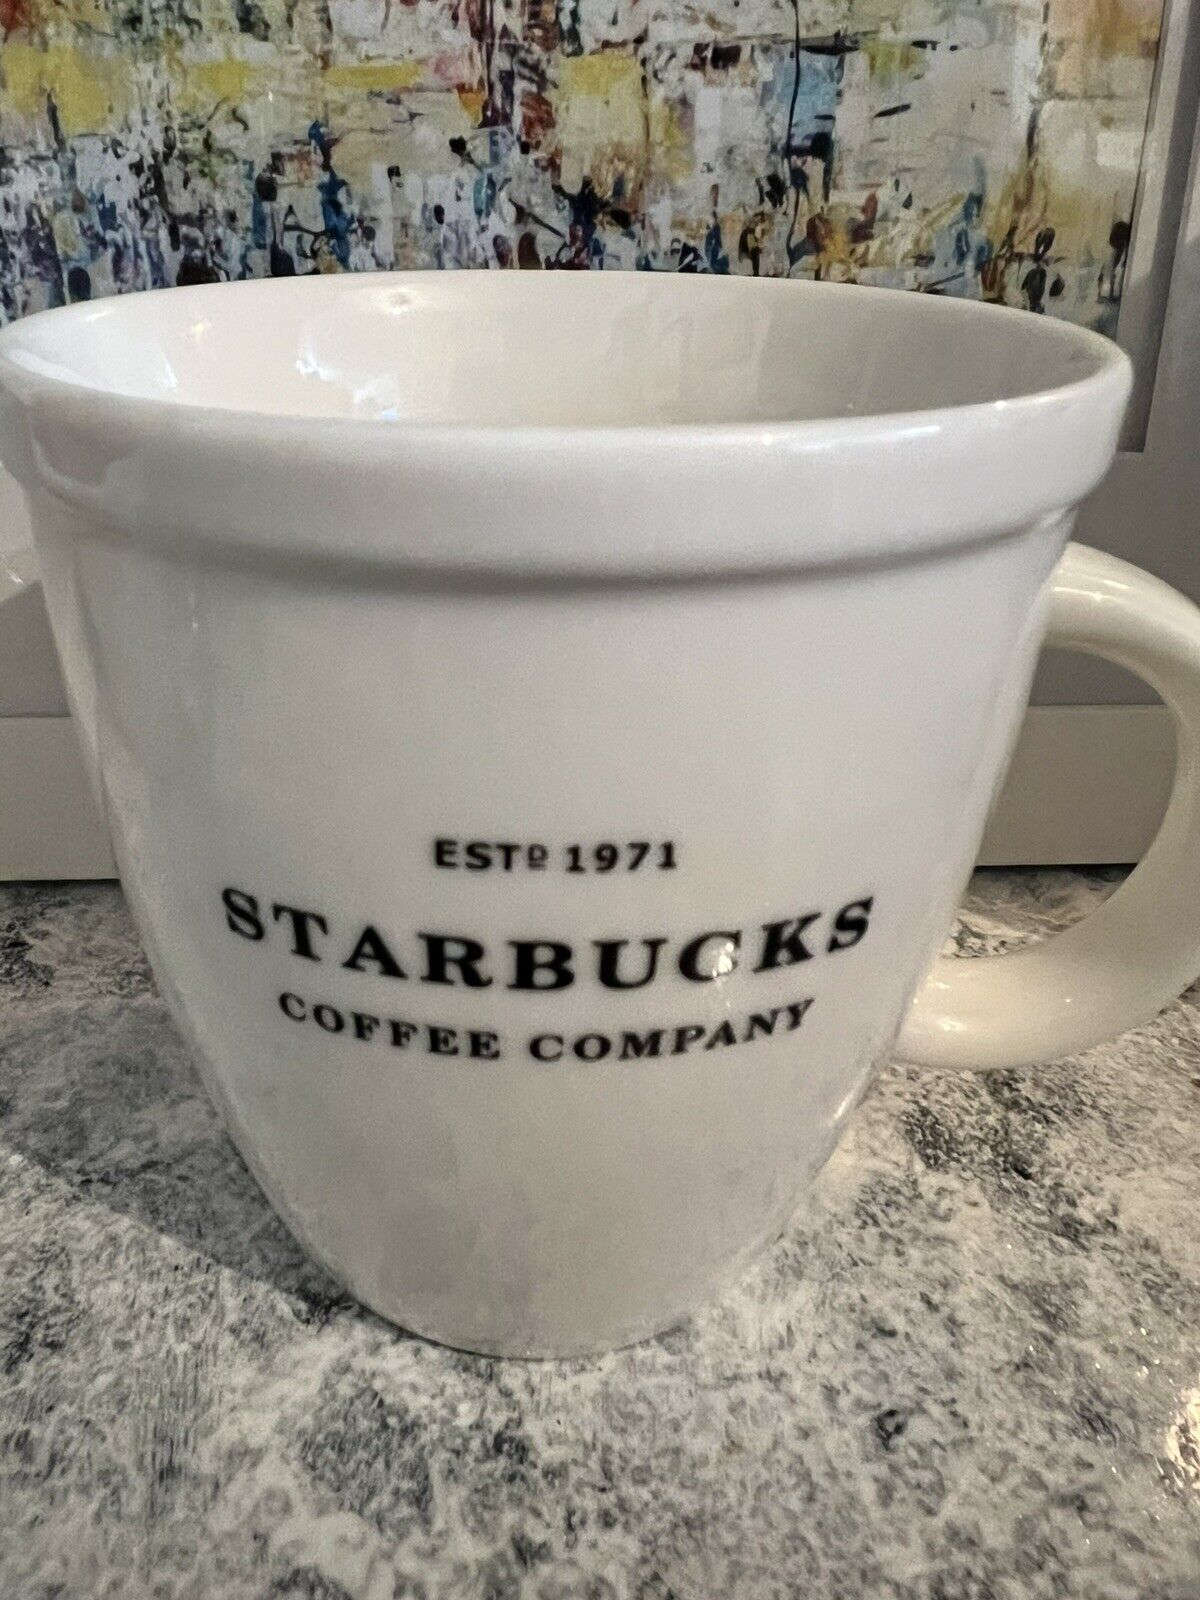 Vintage Starbucks Barista Mug 2001 Ceramic Large White 16oz Coffee Cup Est 1971